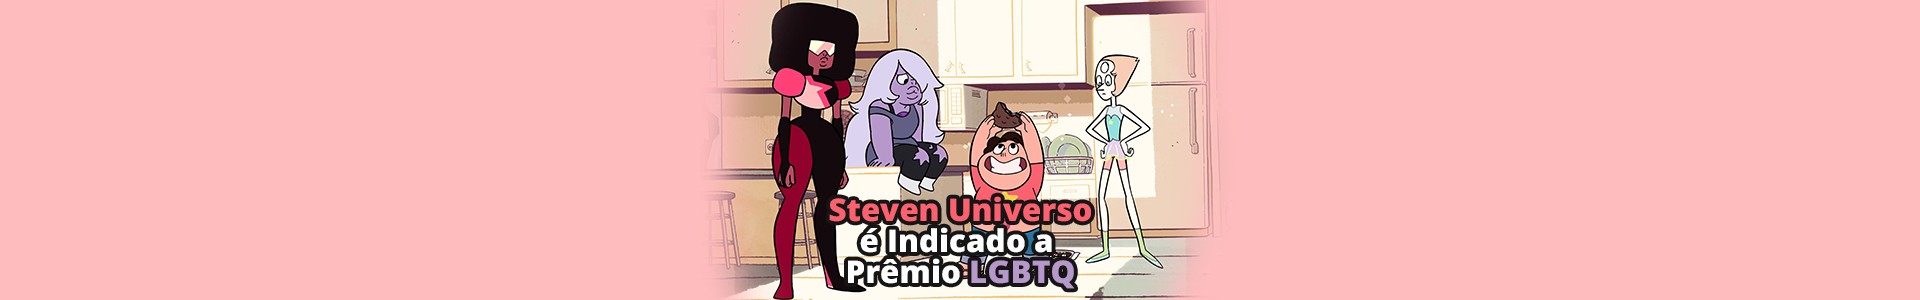 Steven Universo e The Loud House concorrem a prêmio LGBTQ